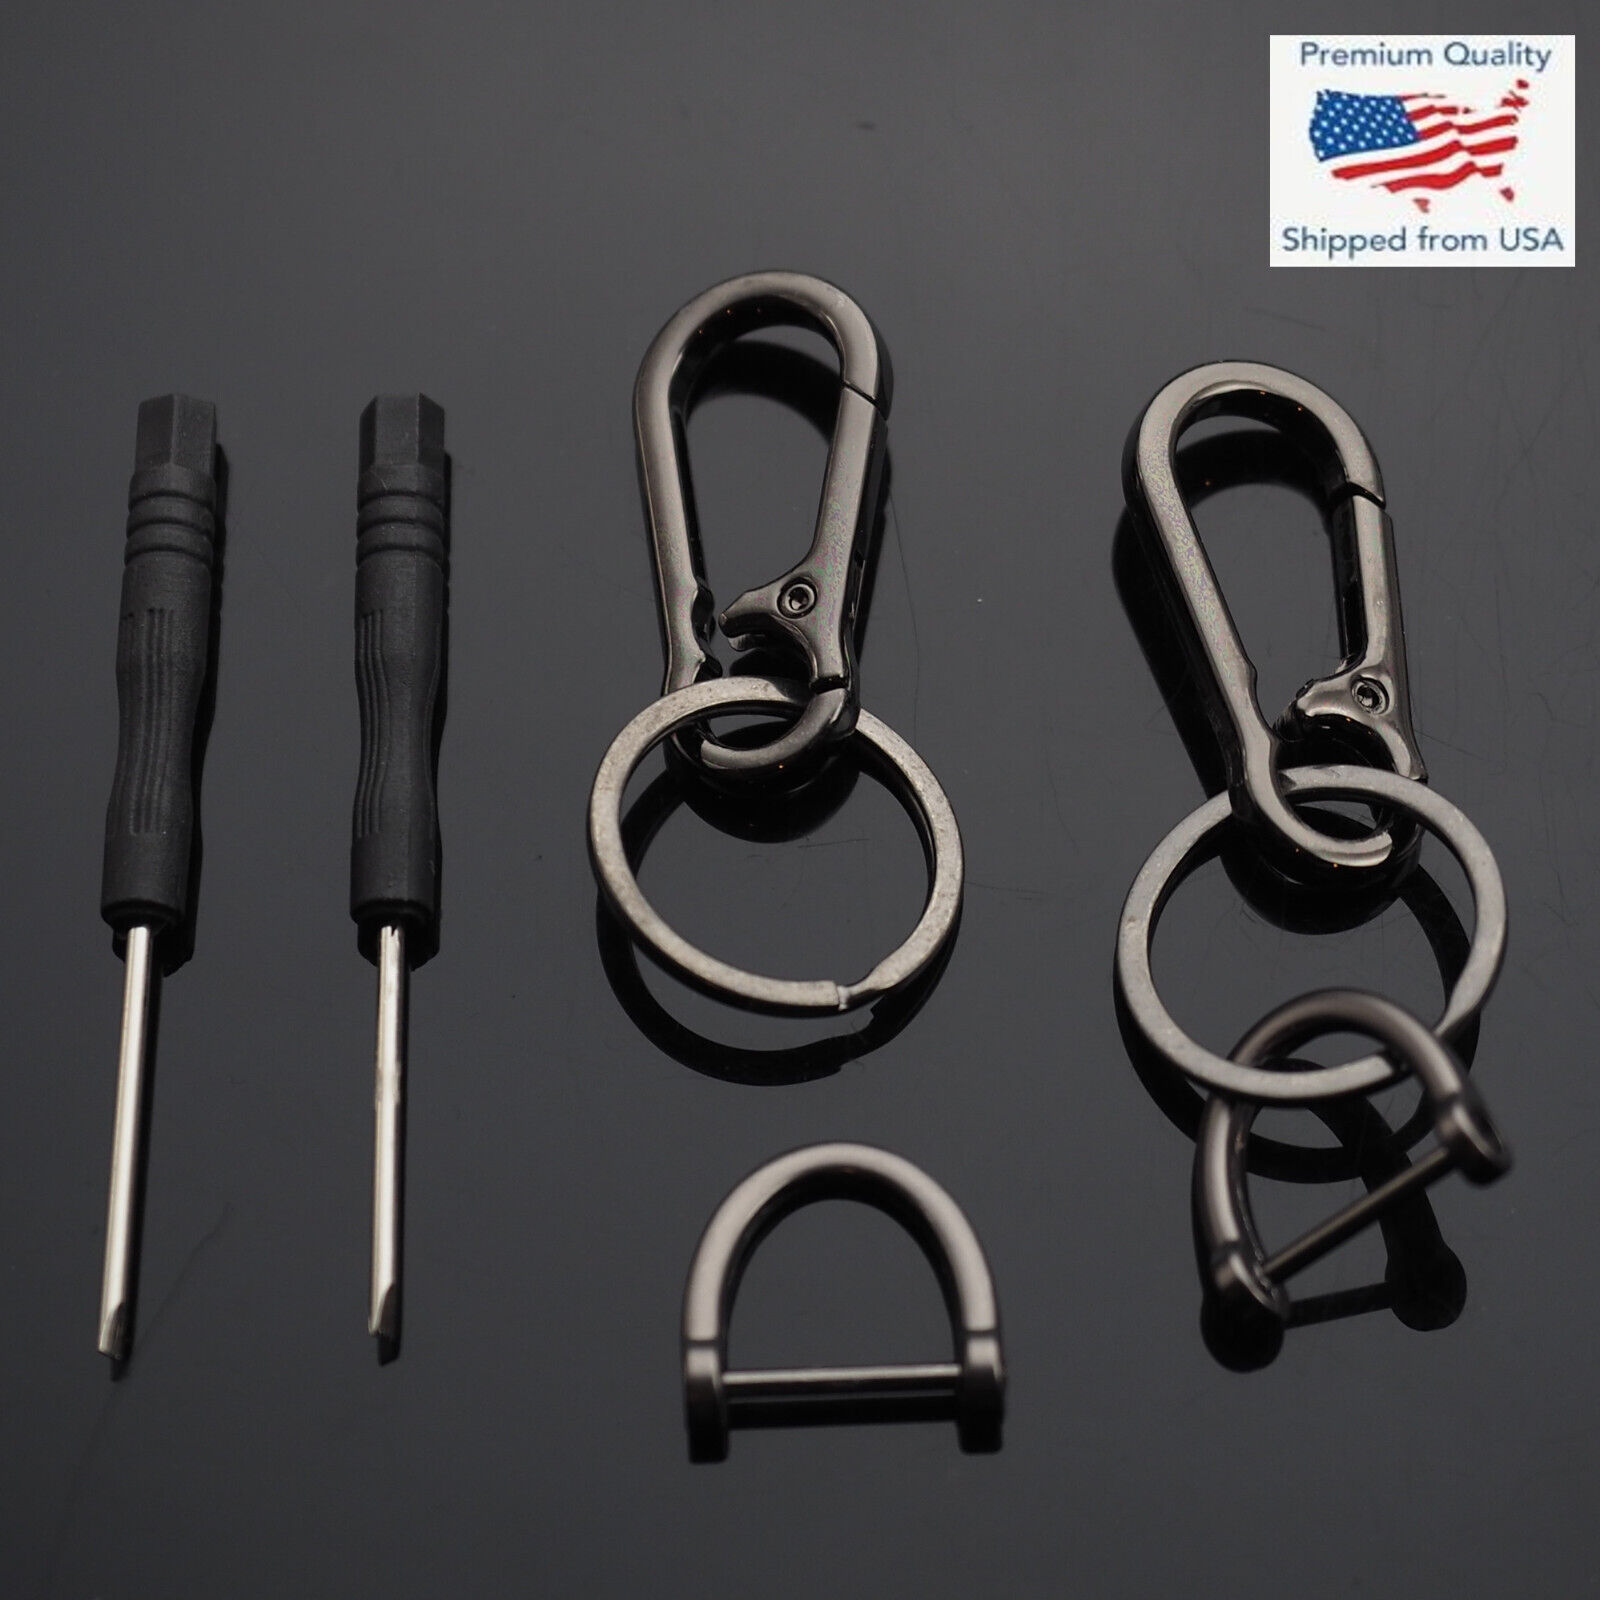 2x Keychain Key Ring Carabiner Clip Bag Keyring Chain Fob D-Ring Holders - Black